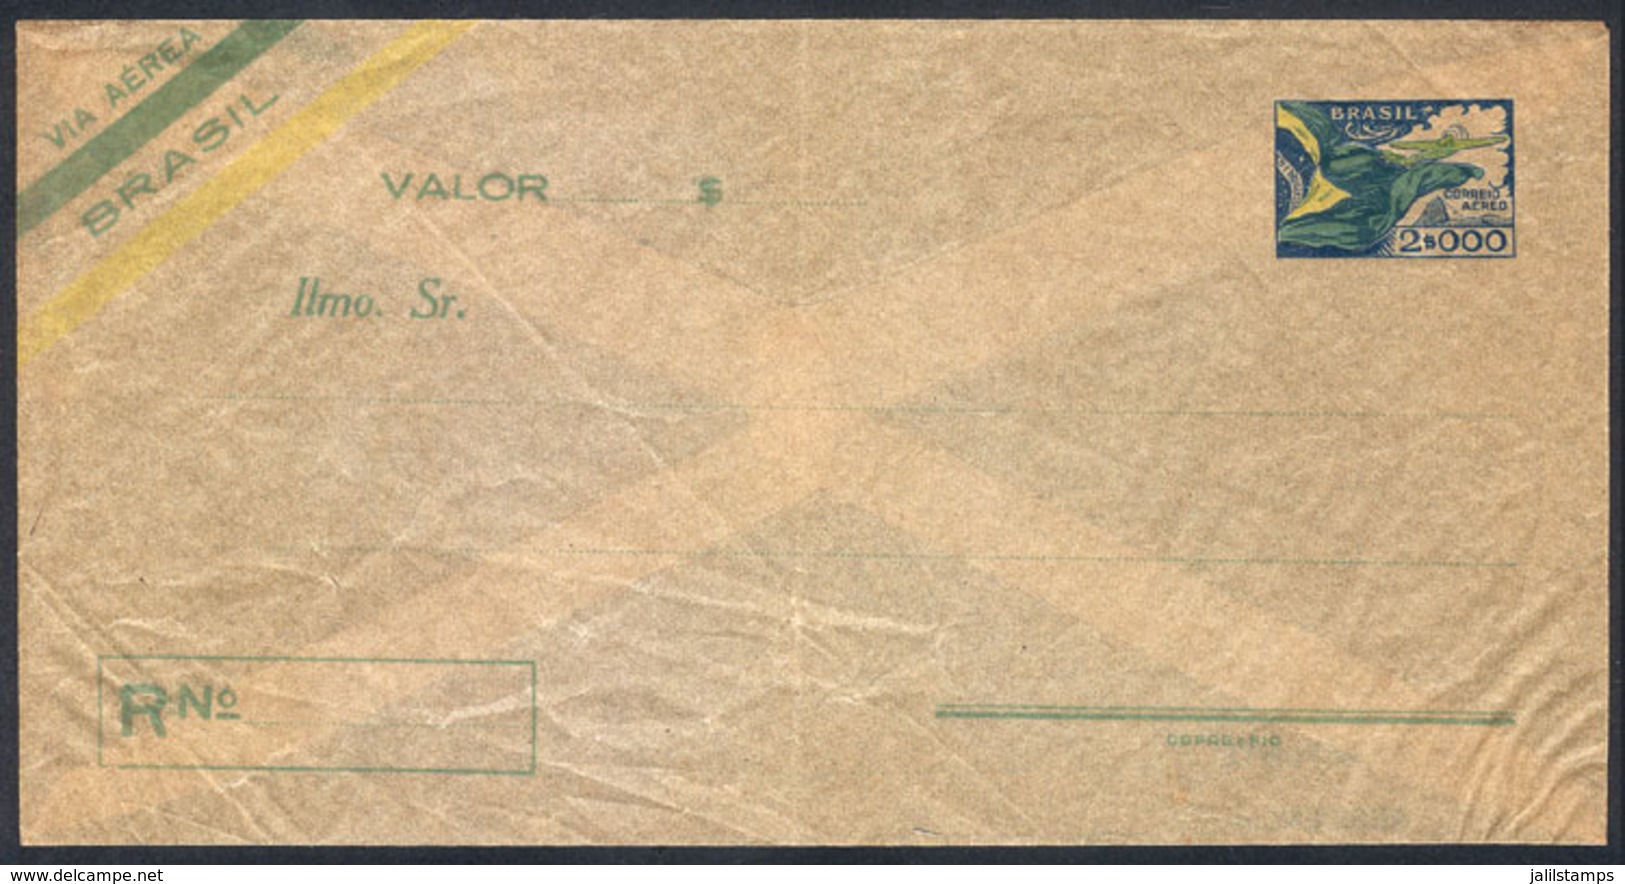 BRAZIL: RHM.EV-13, Unused Envelope For Declared Value, Fine Quality, Catalog Value 900Rs., Low Start! - Ganzsachen